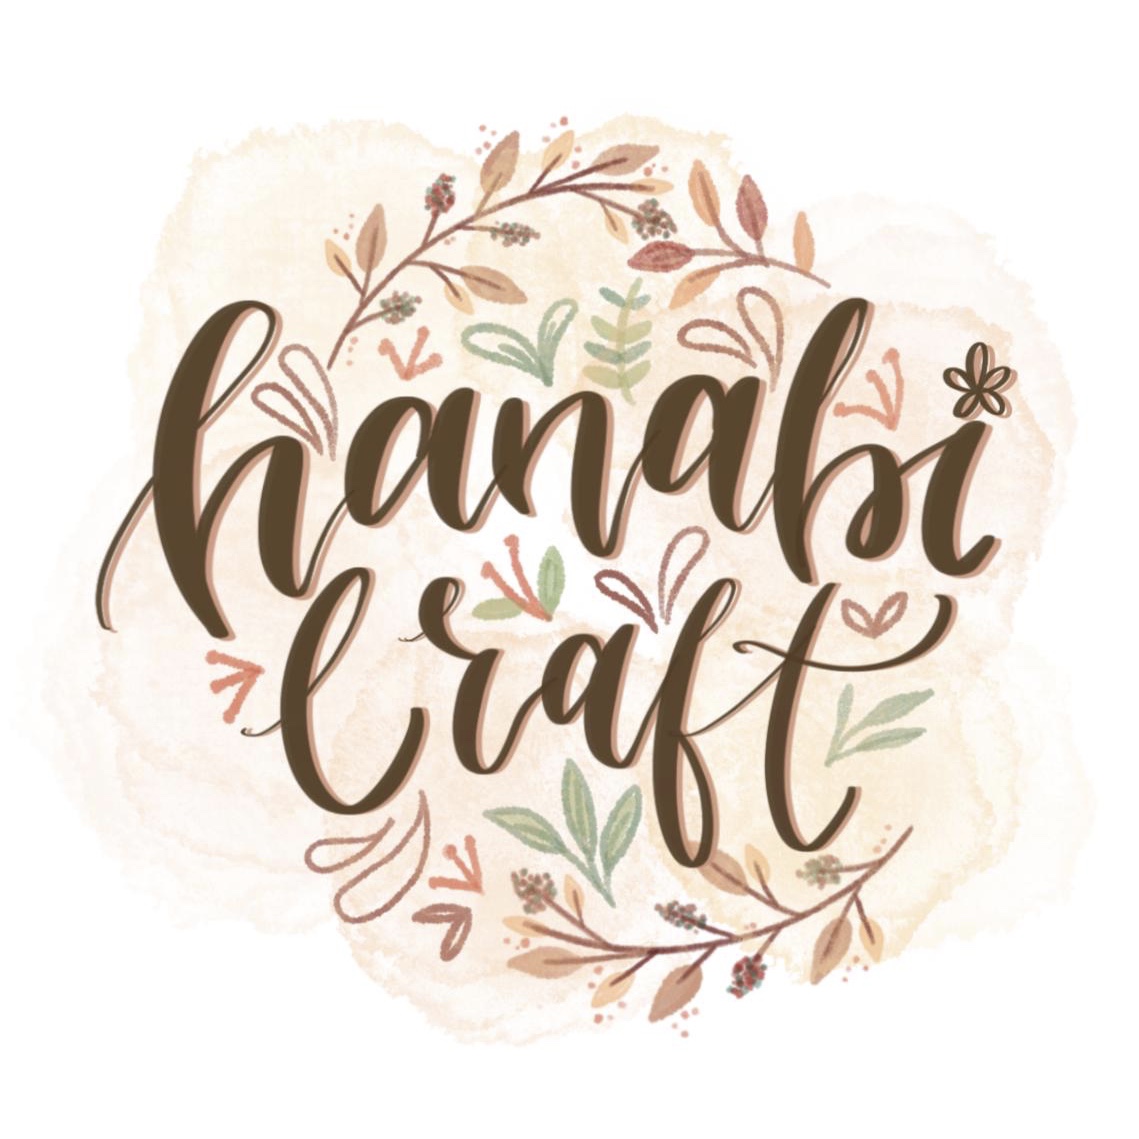 Hanabi Craft